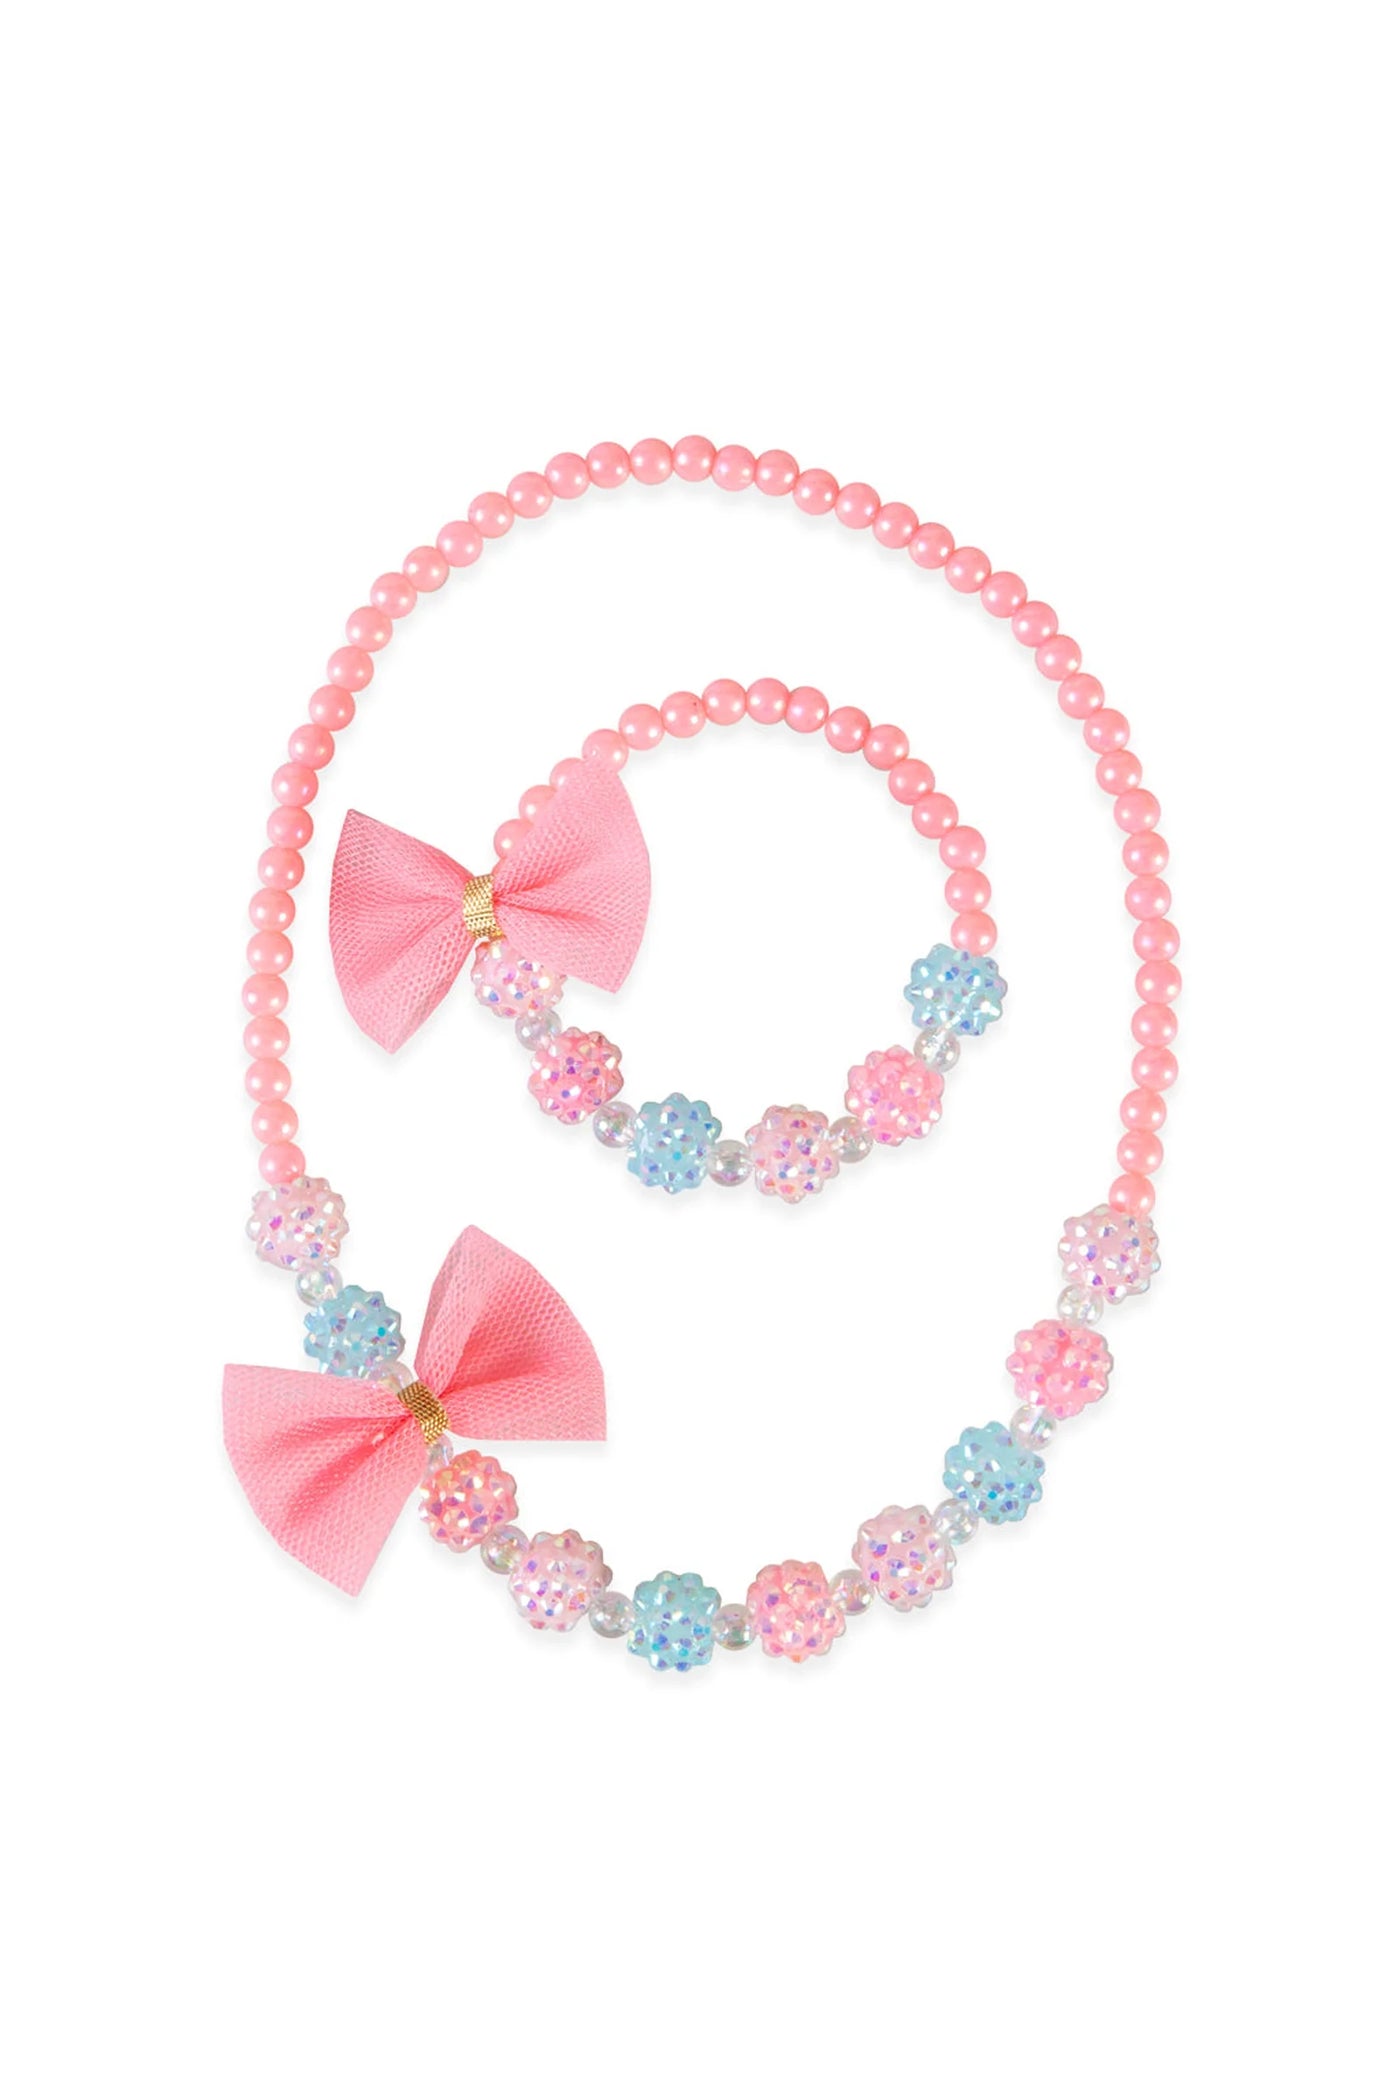 Think Pink Necklace/Bracelet Set